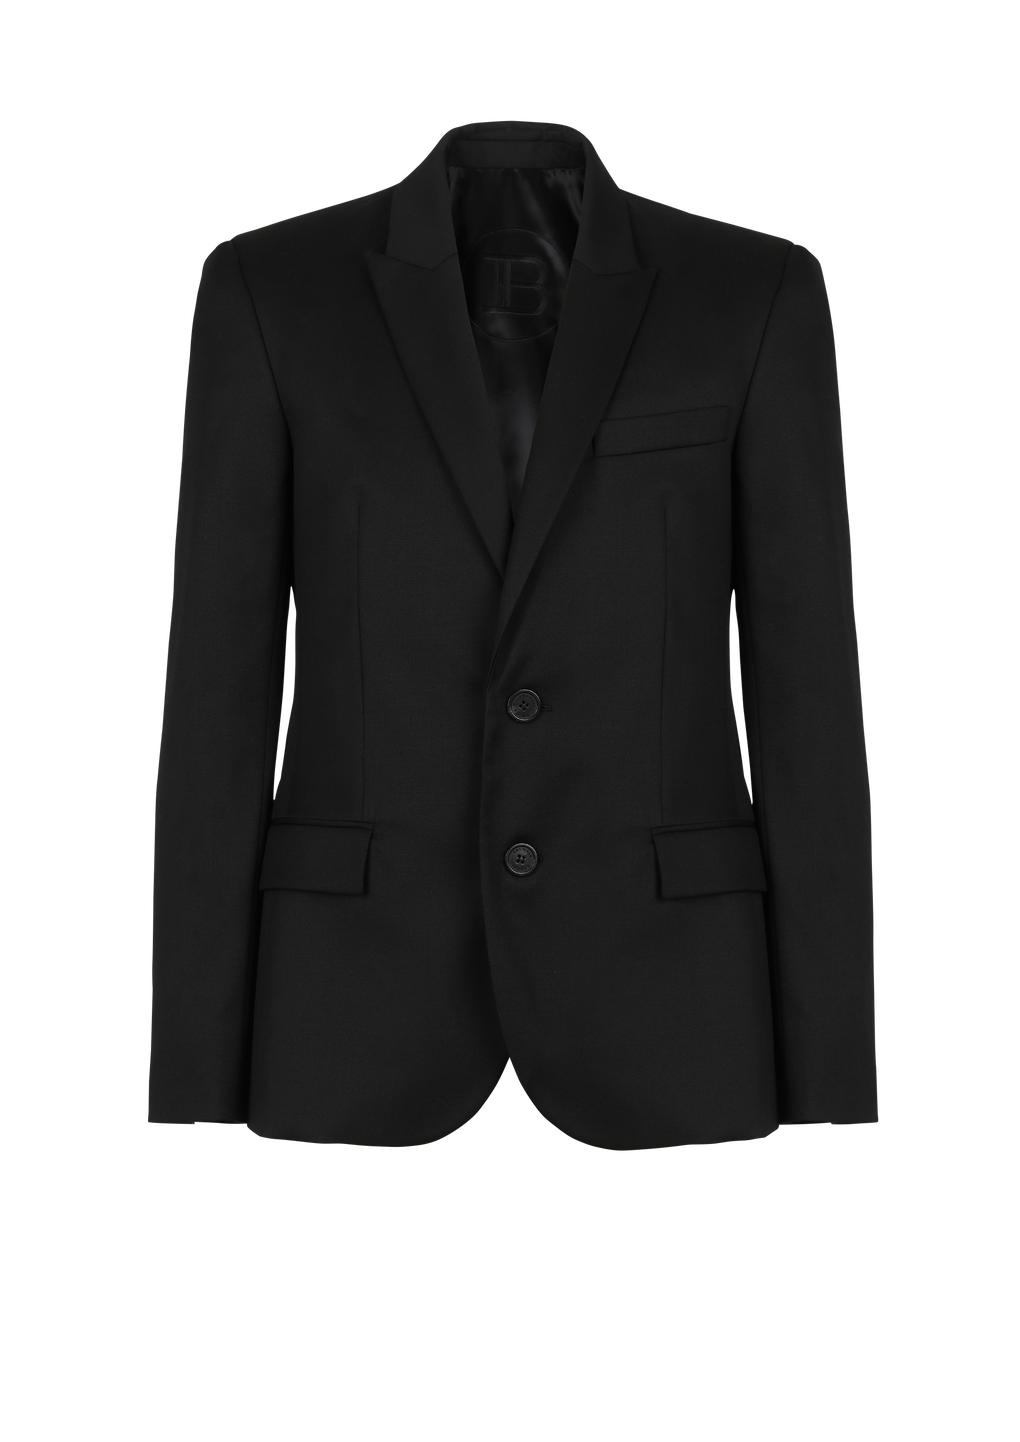 Two-button wool blazer , black, hi-res